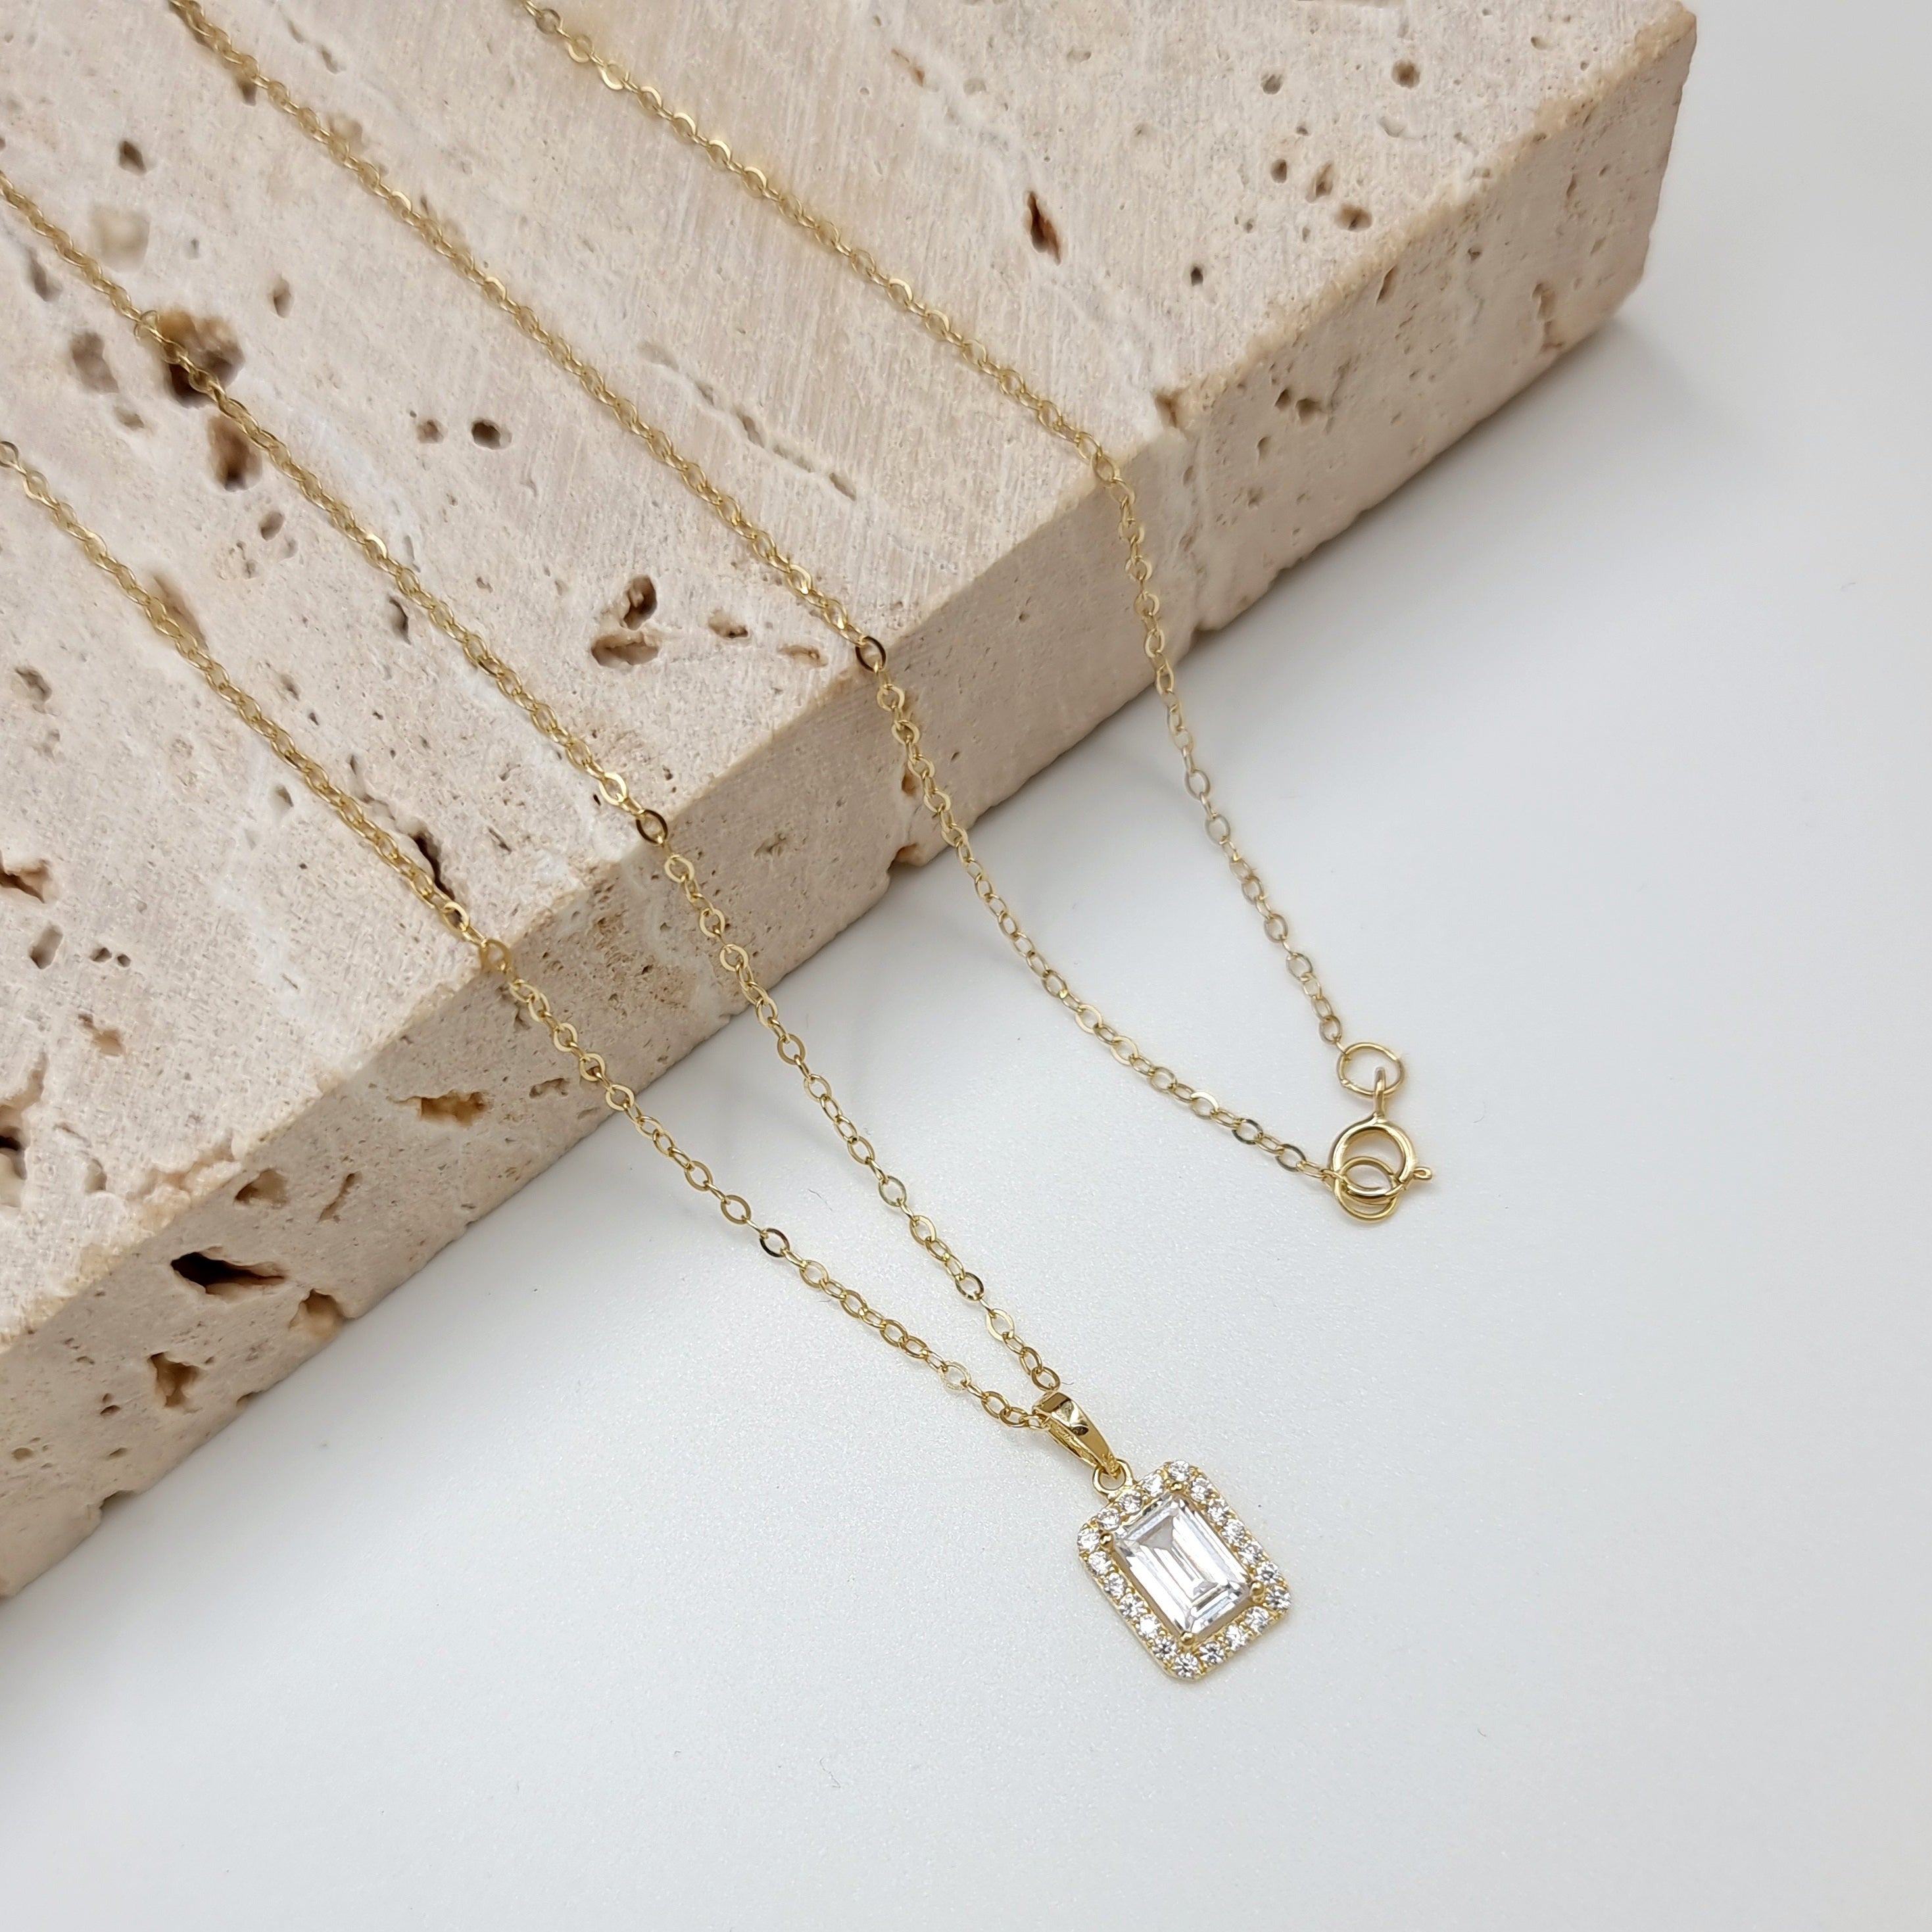 18K Pure Gold Rectangle Design w/ Zircon Stone Necklace